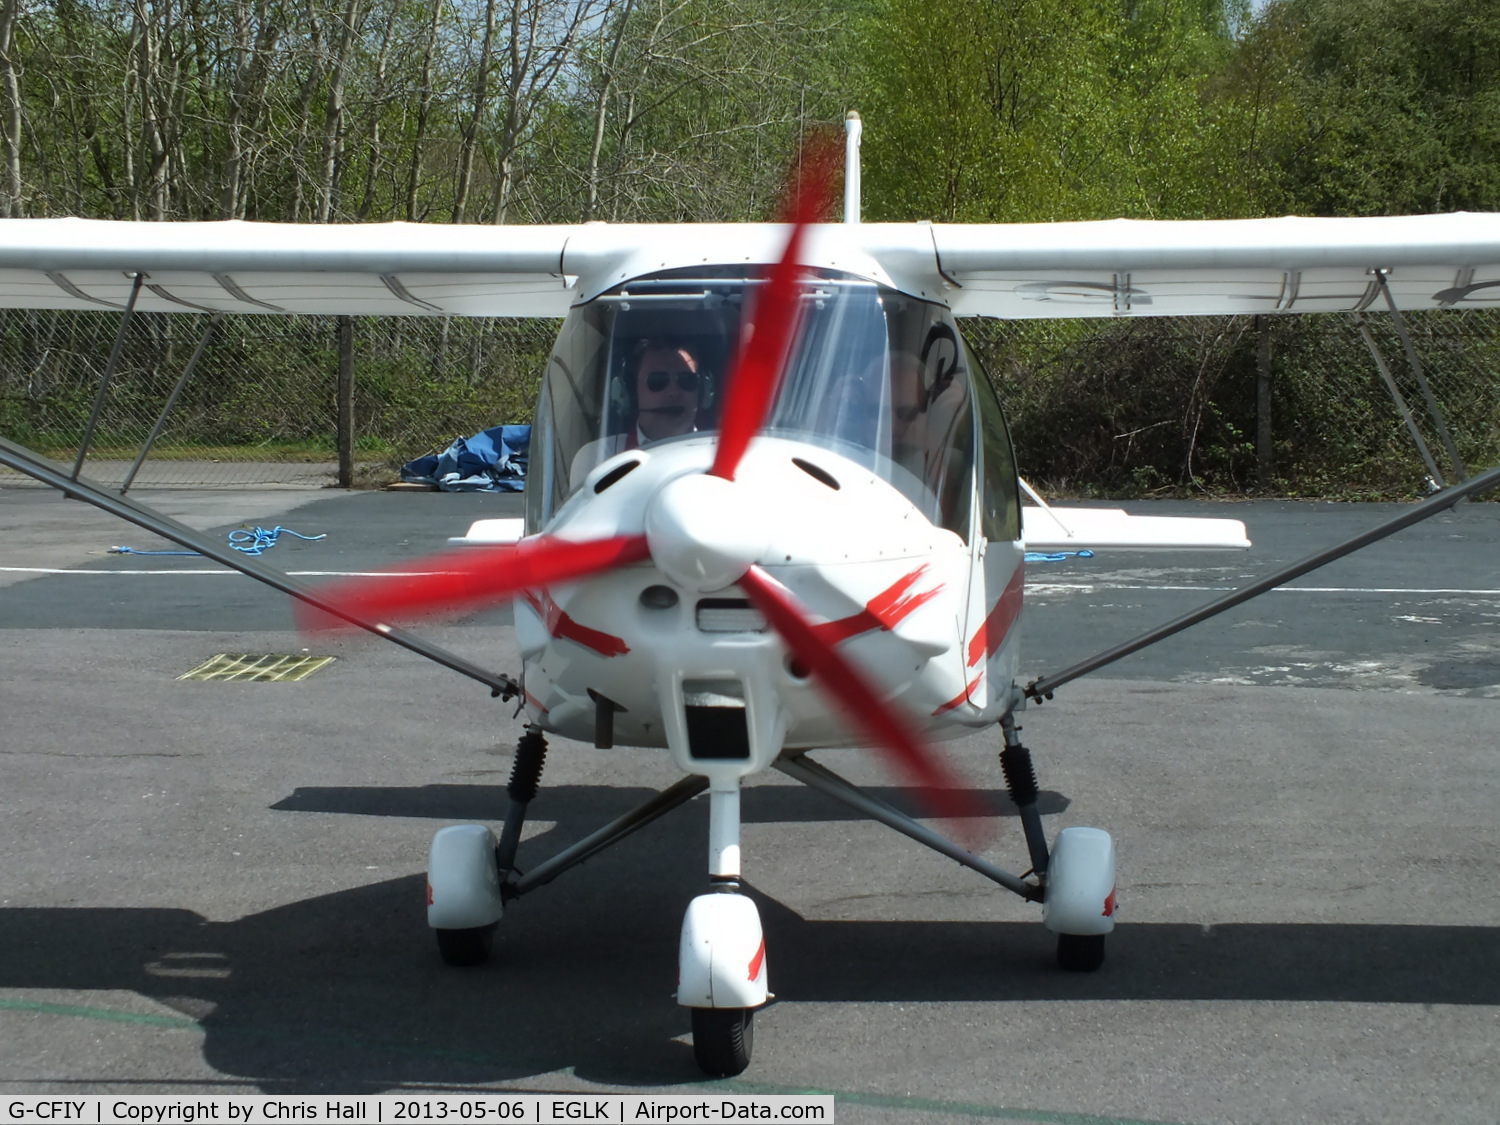 G-CFIY, 2008 Comco Ikarus C42 FB100 C/N 0804-6954, Aerosport Aviation Ltd